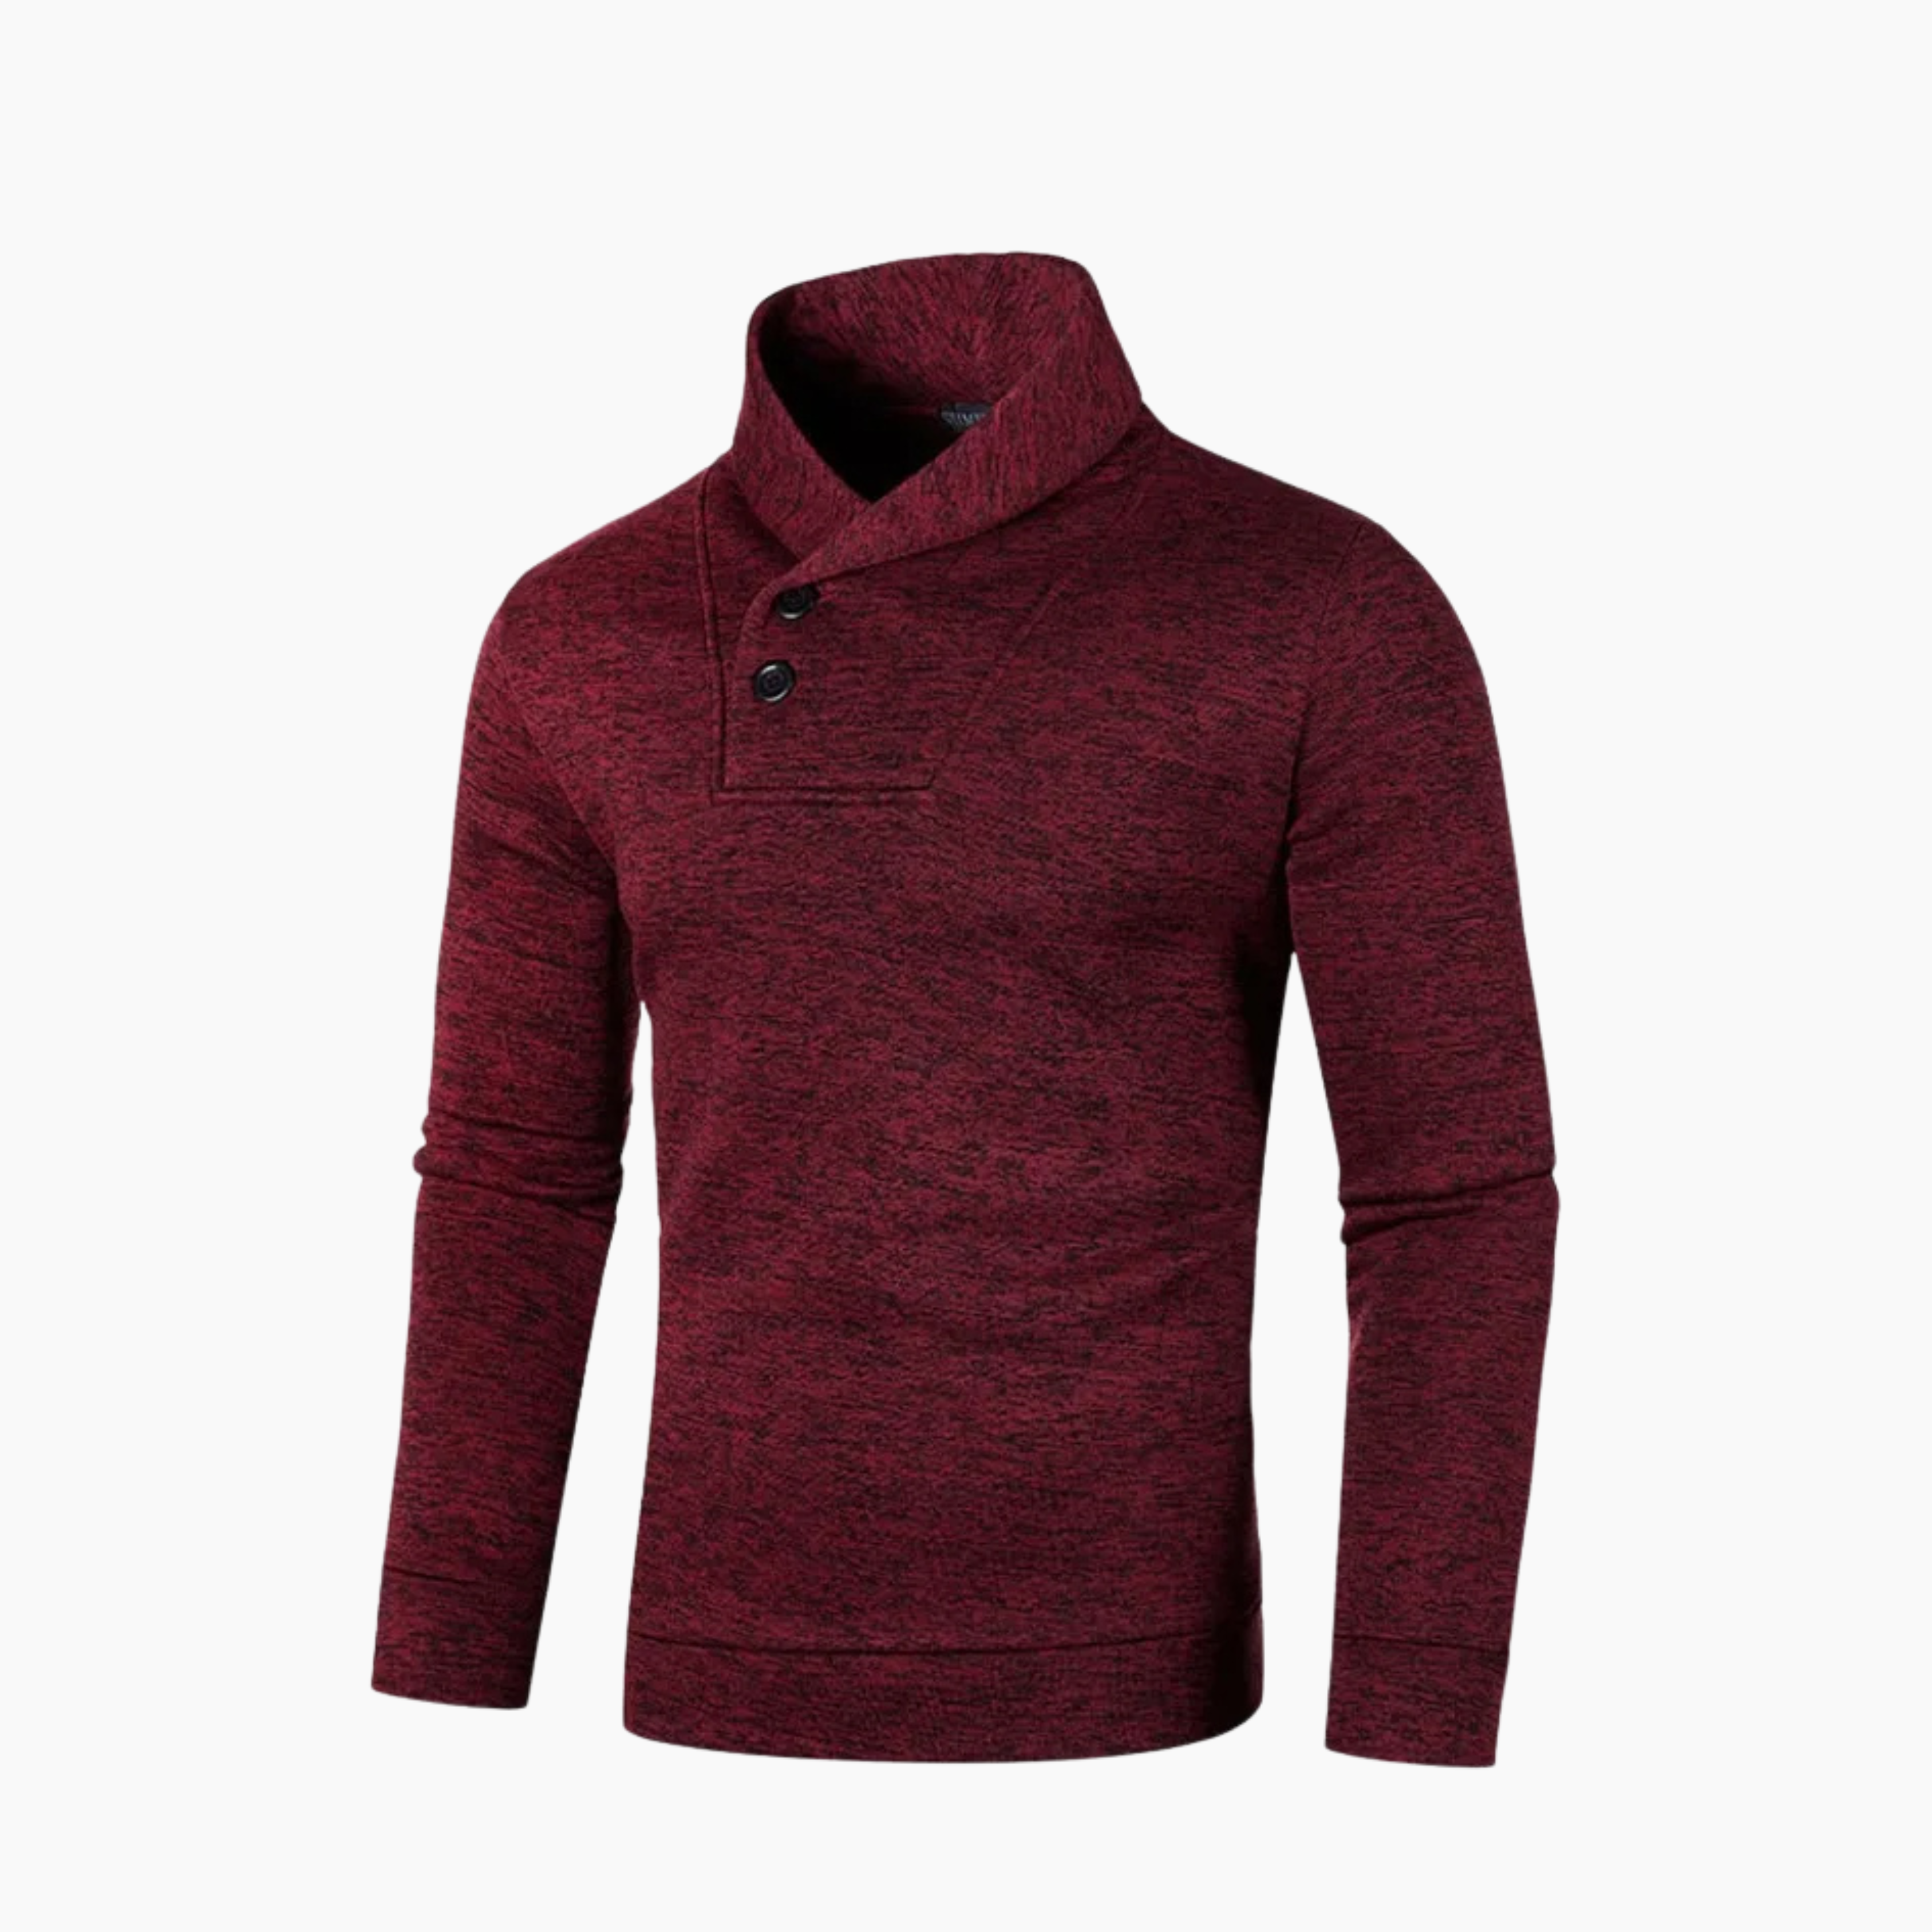 CALEB™ - Warm Turtleneck Sweater